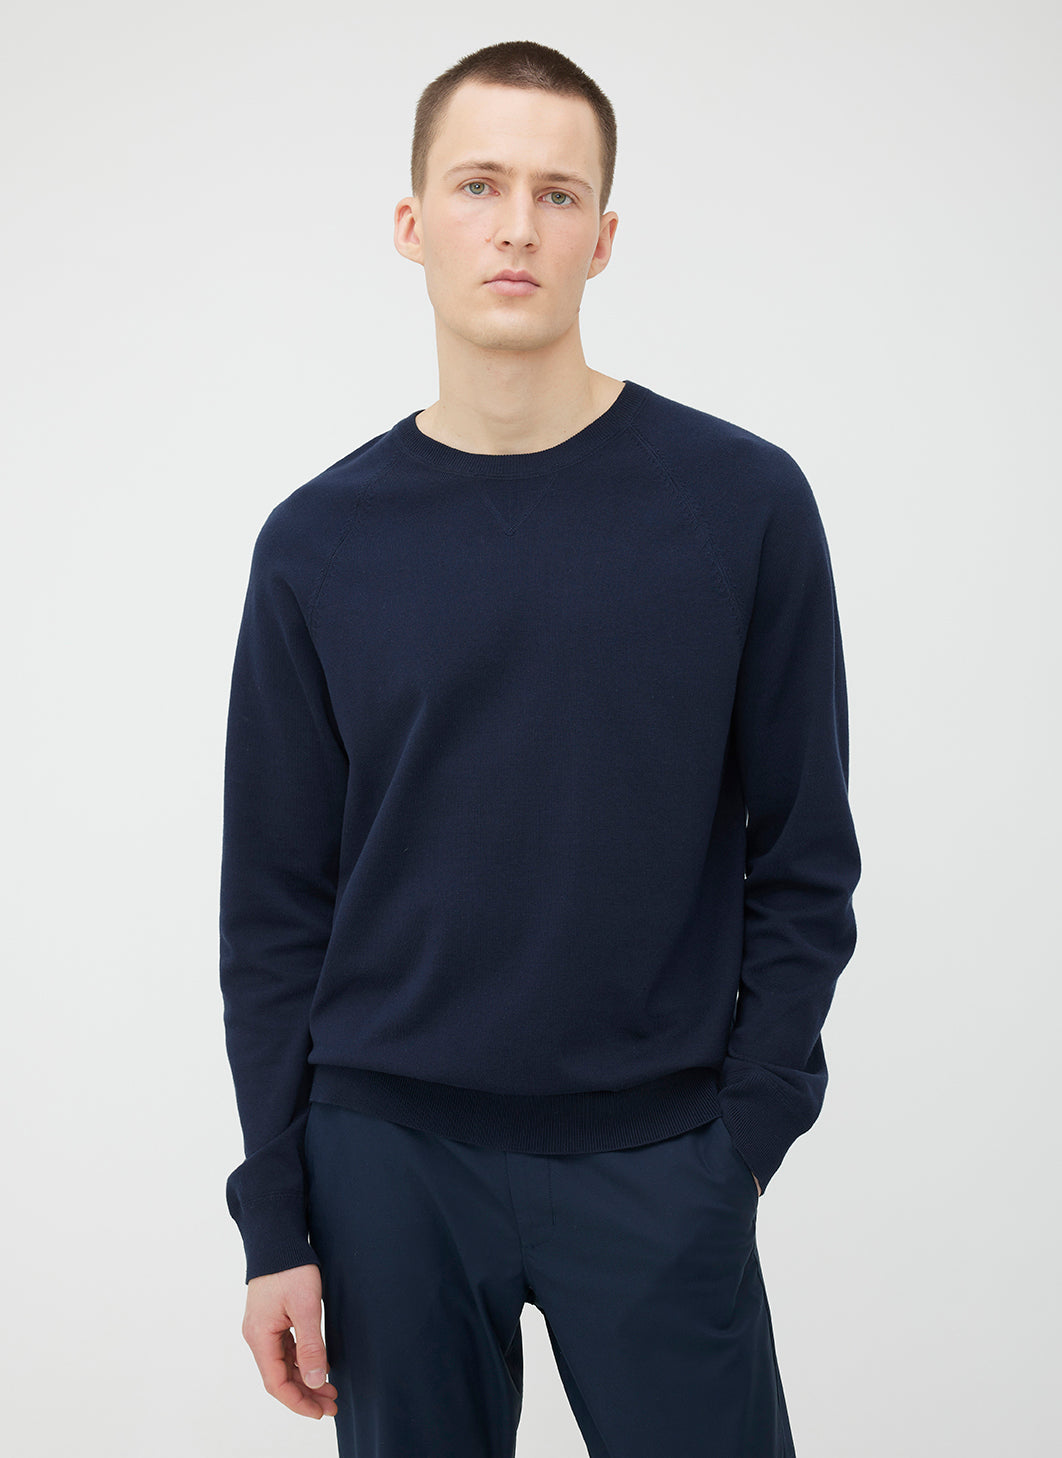 Urban Raglan Sweater  Men's Sweaters – Kit and Ace